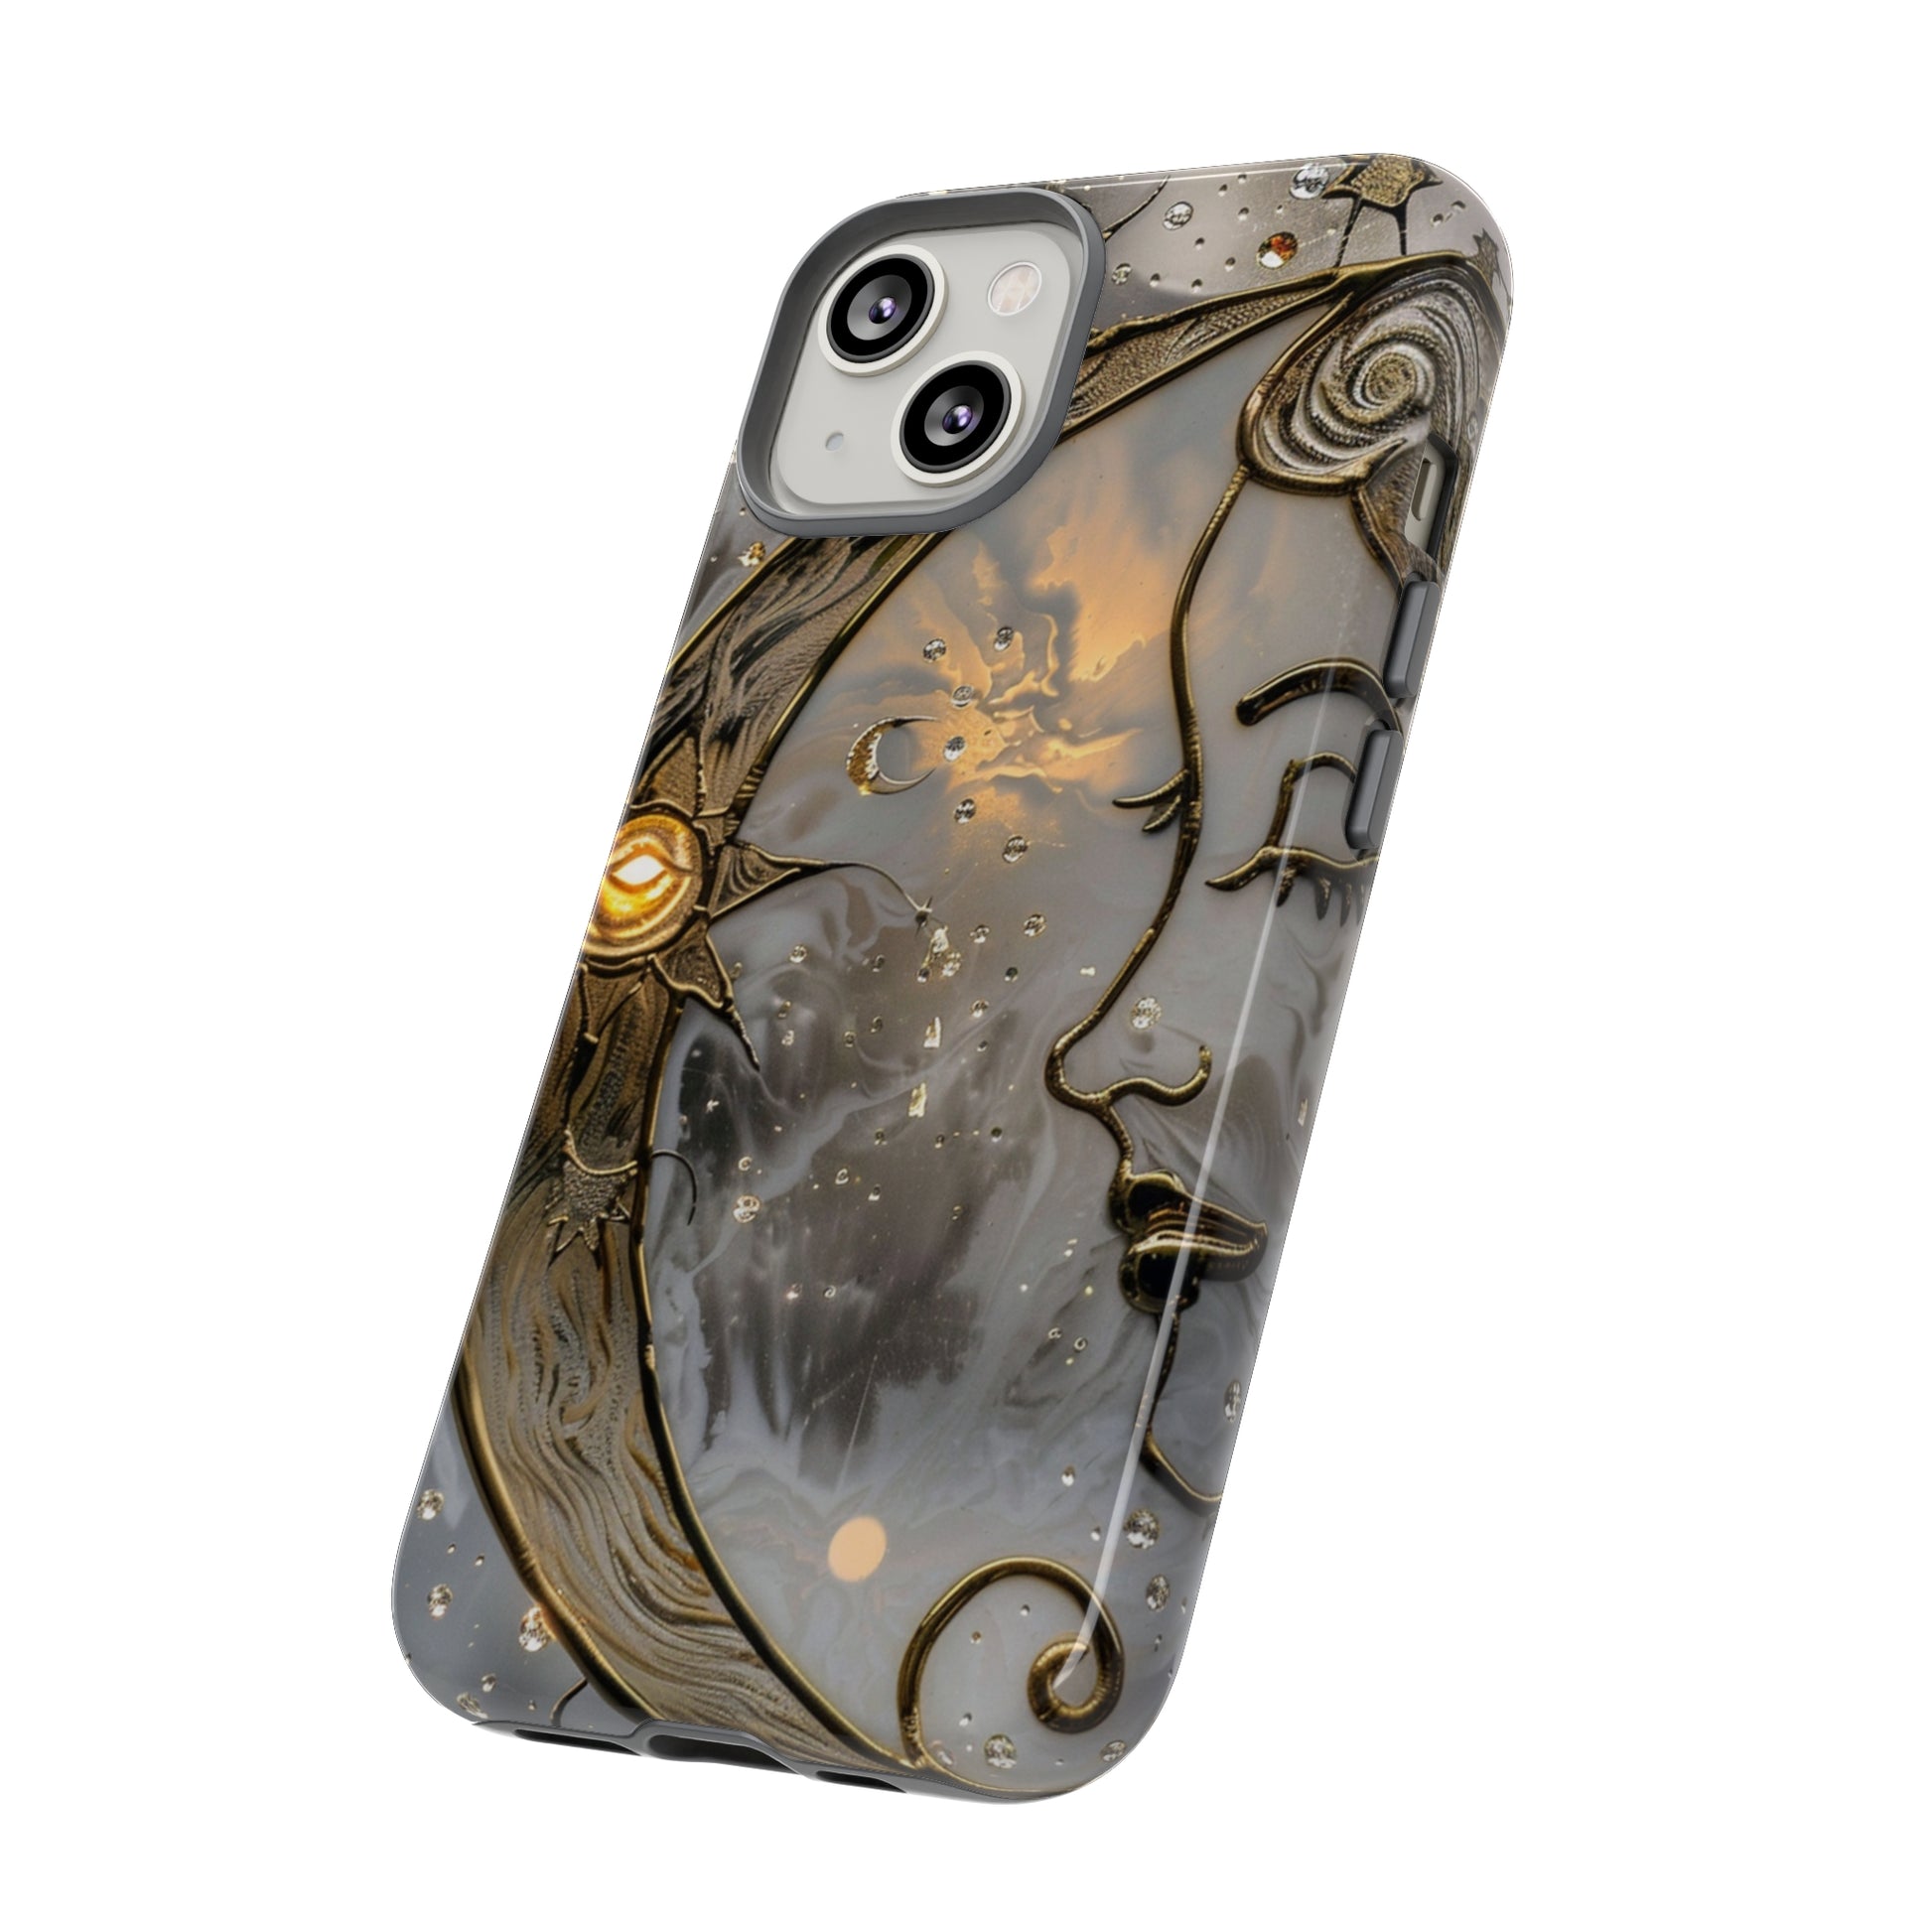 Celestial Design Phone Cover